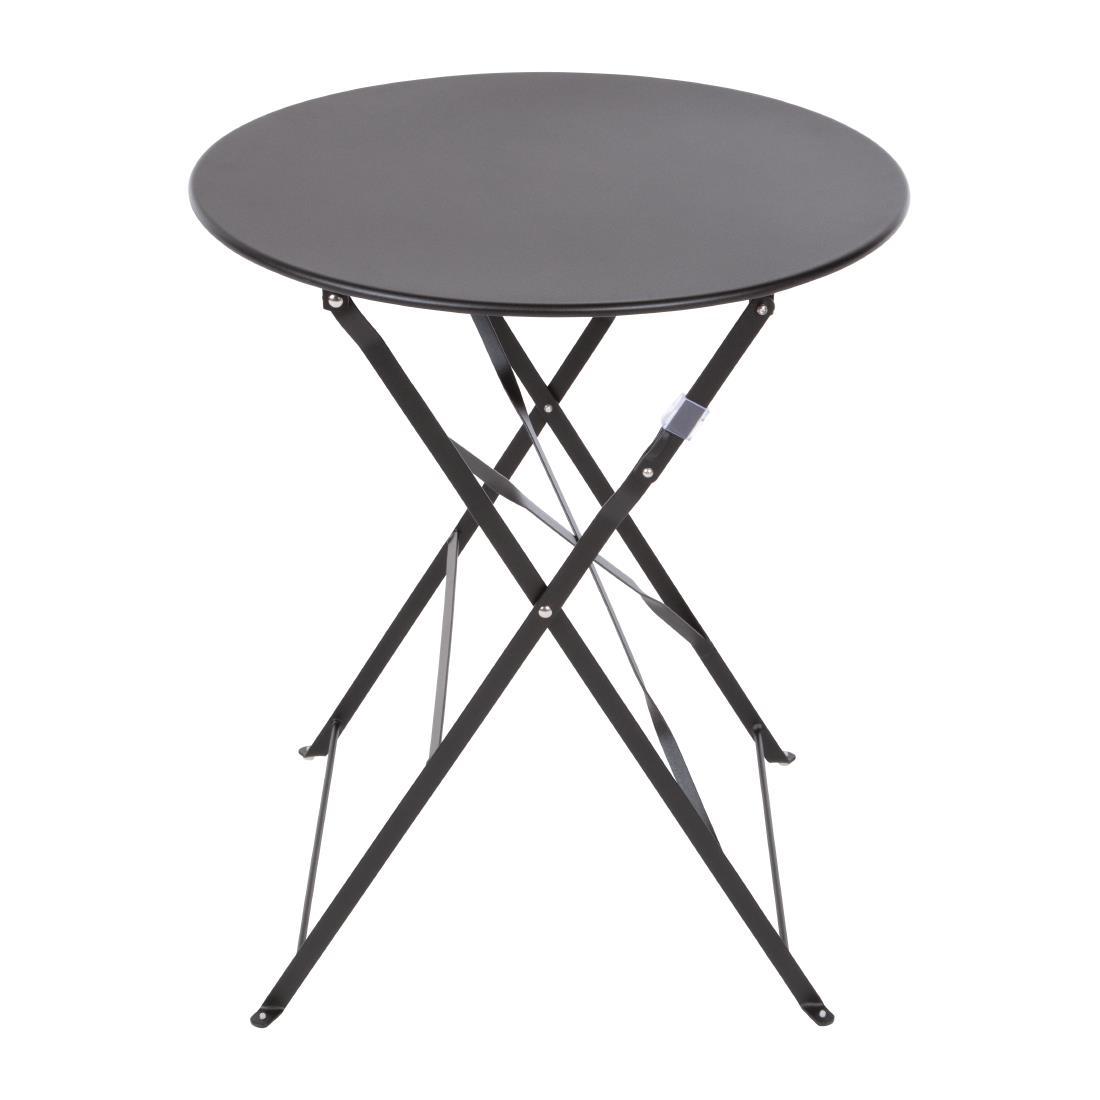 Bolero Black Pavement Style Steel Table 595mm - GH558  - 10